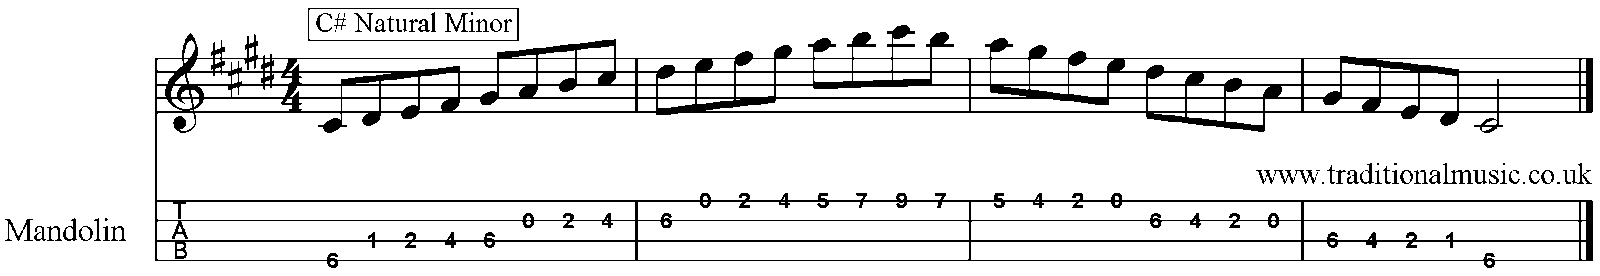 Minor Scales for Mandolin C# 